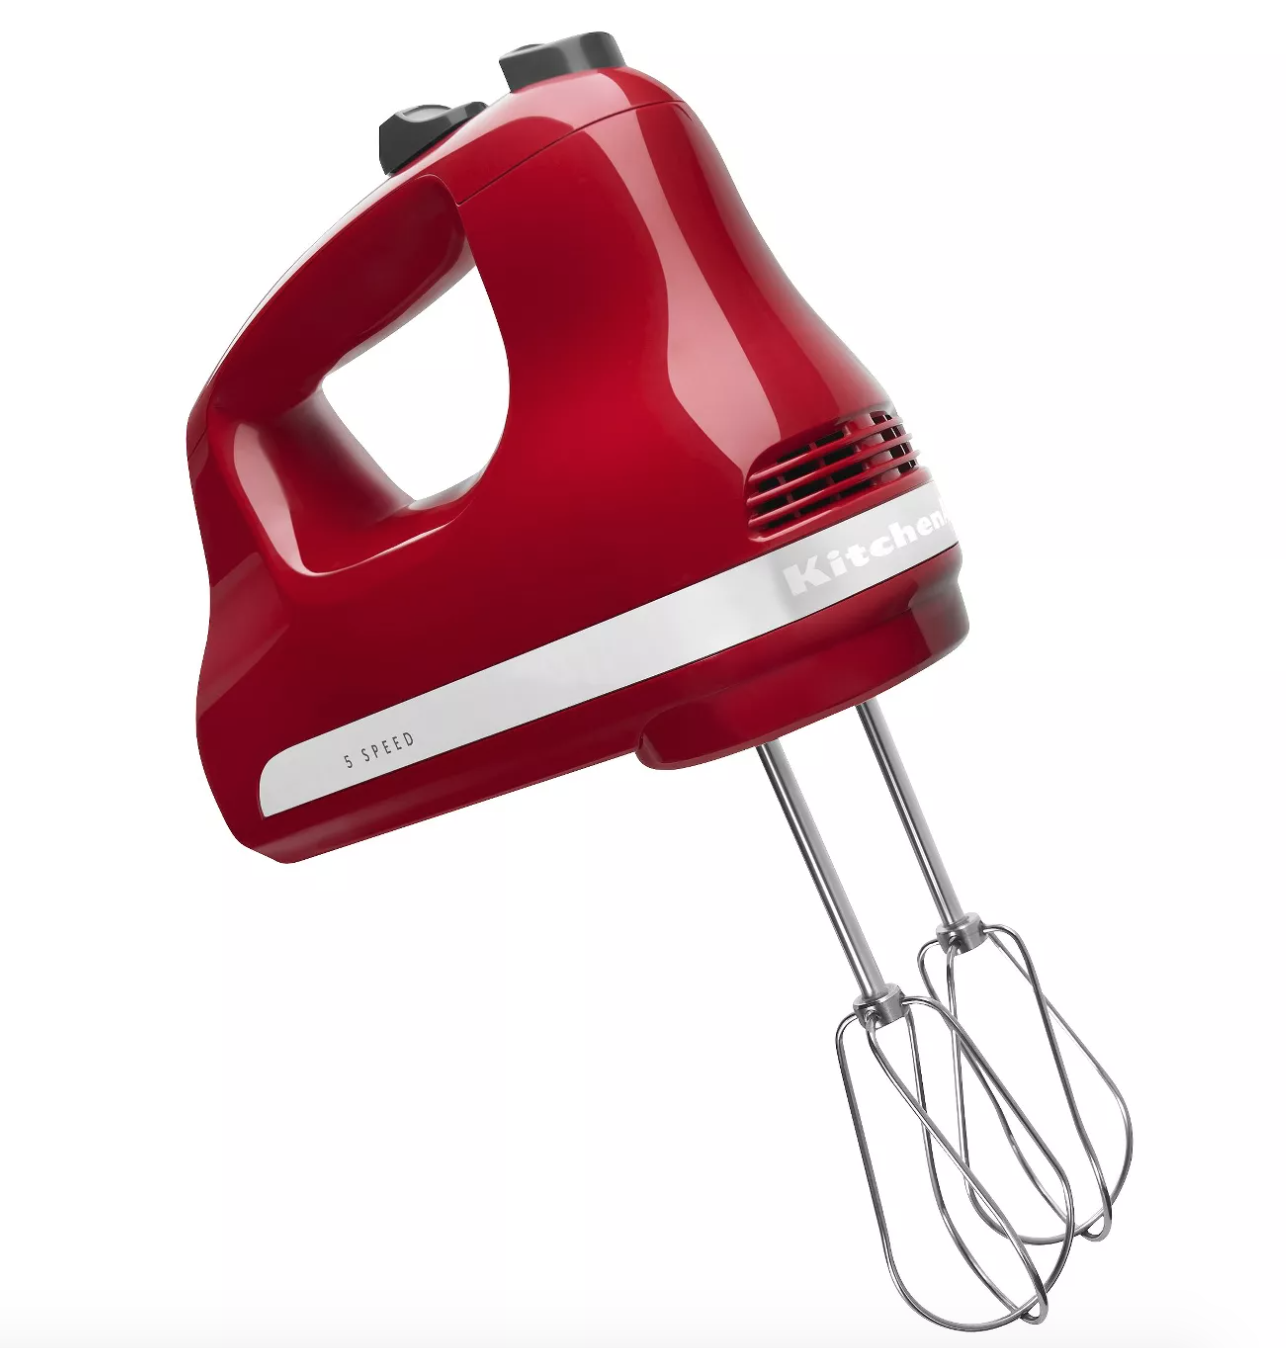 a red kitchenaid hand mixer